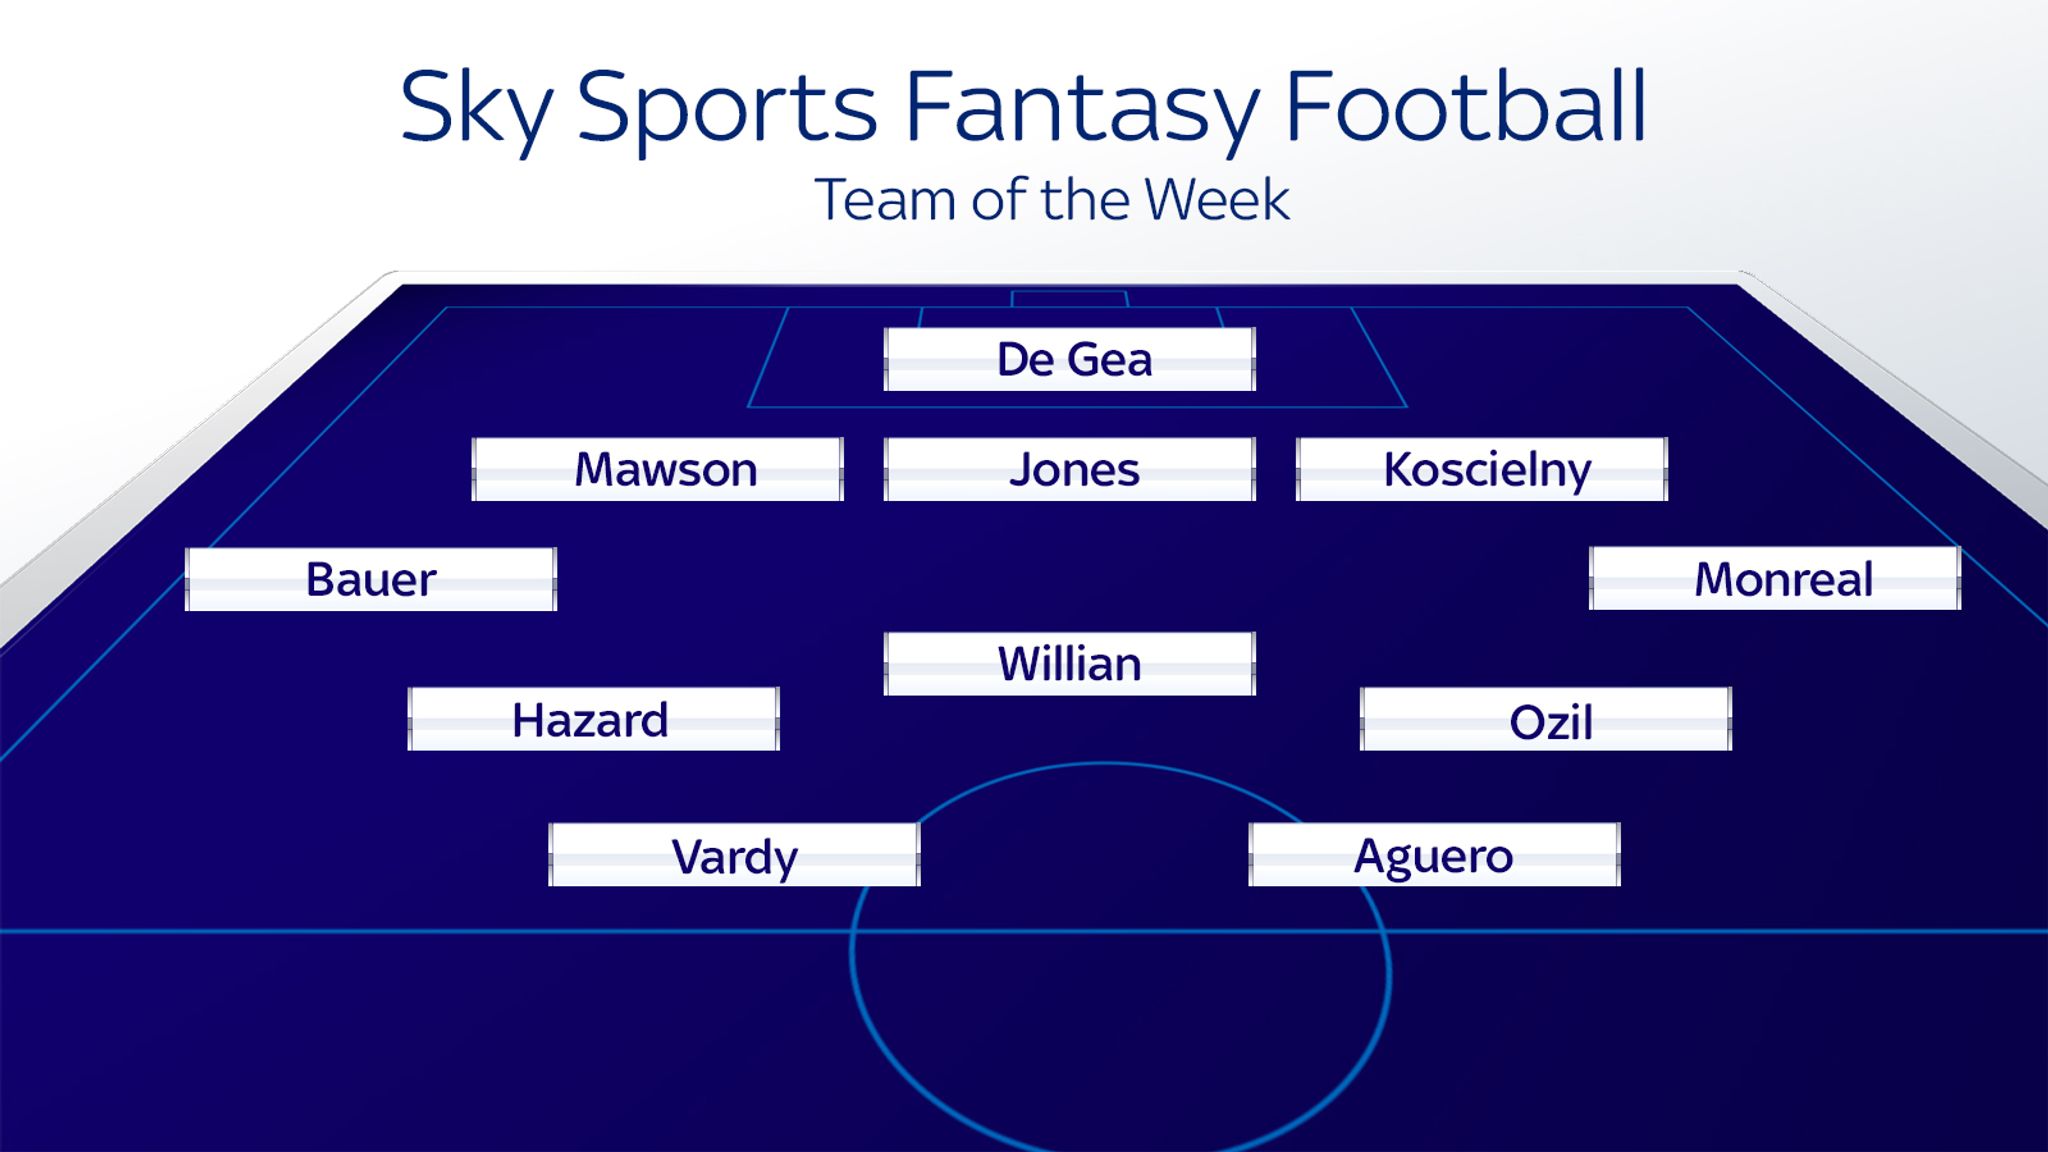 Sergio Aguero leads the latest Sky Sports Fantasy Football team of the